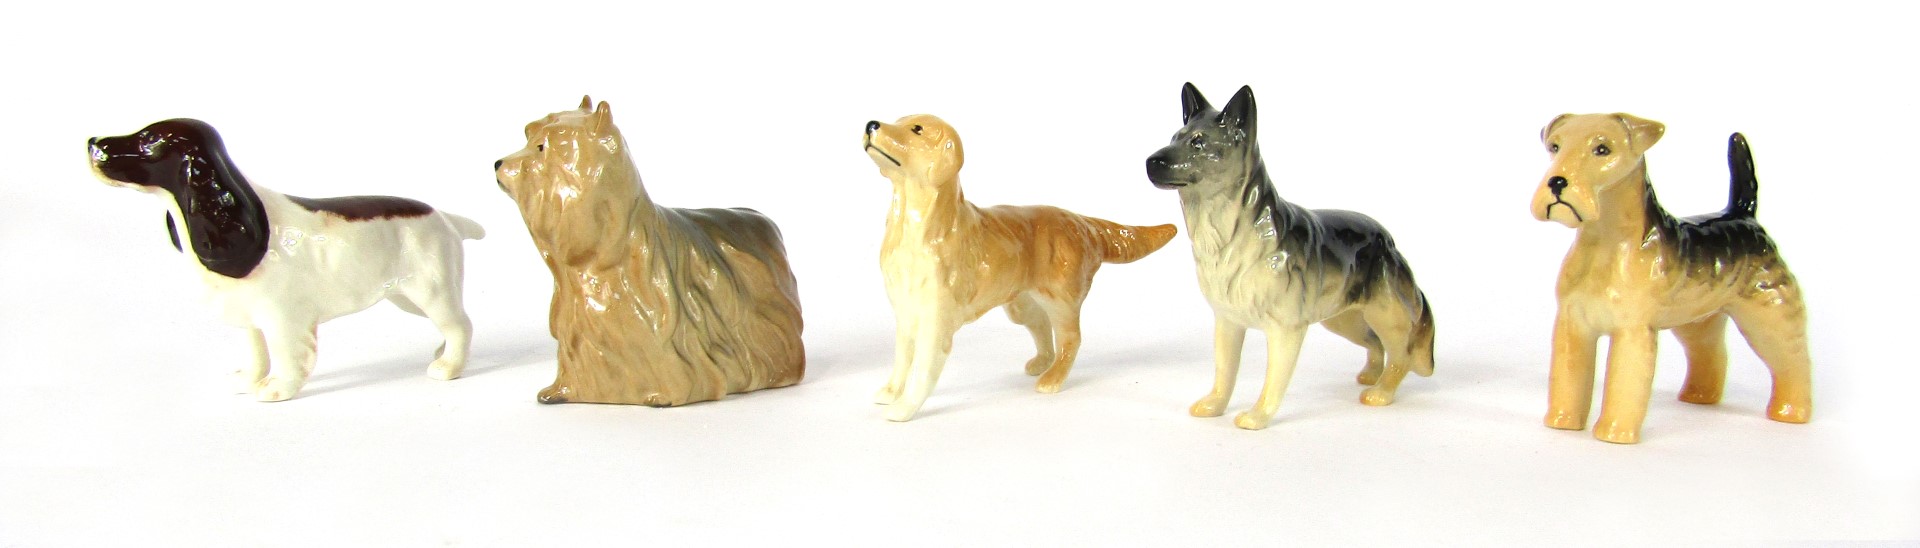 Five Beswick dog ornaments, comprising a Retriever, Yorkshire Terrier, Cocker Spaniel (brown), Alsat